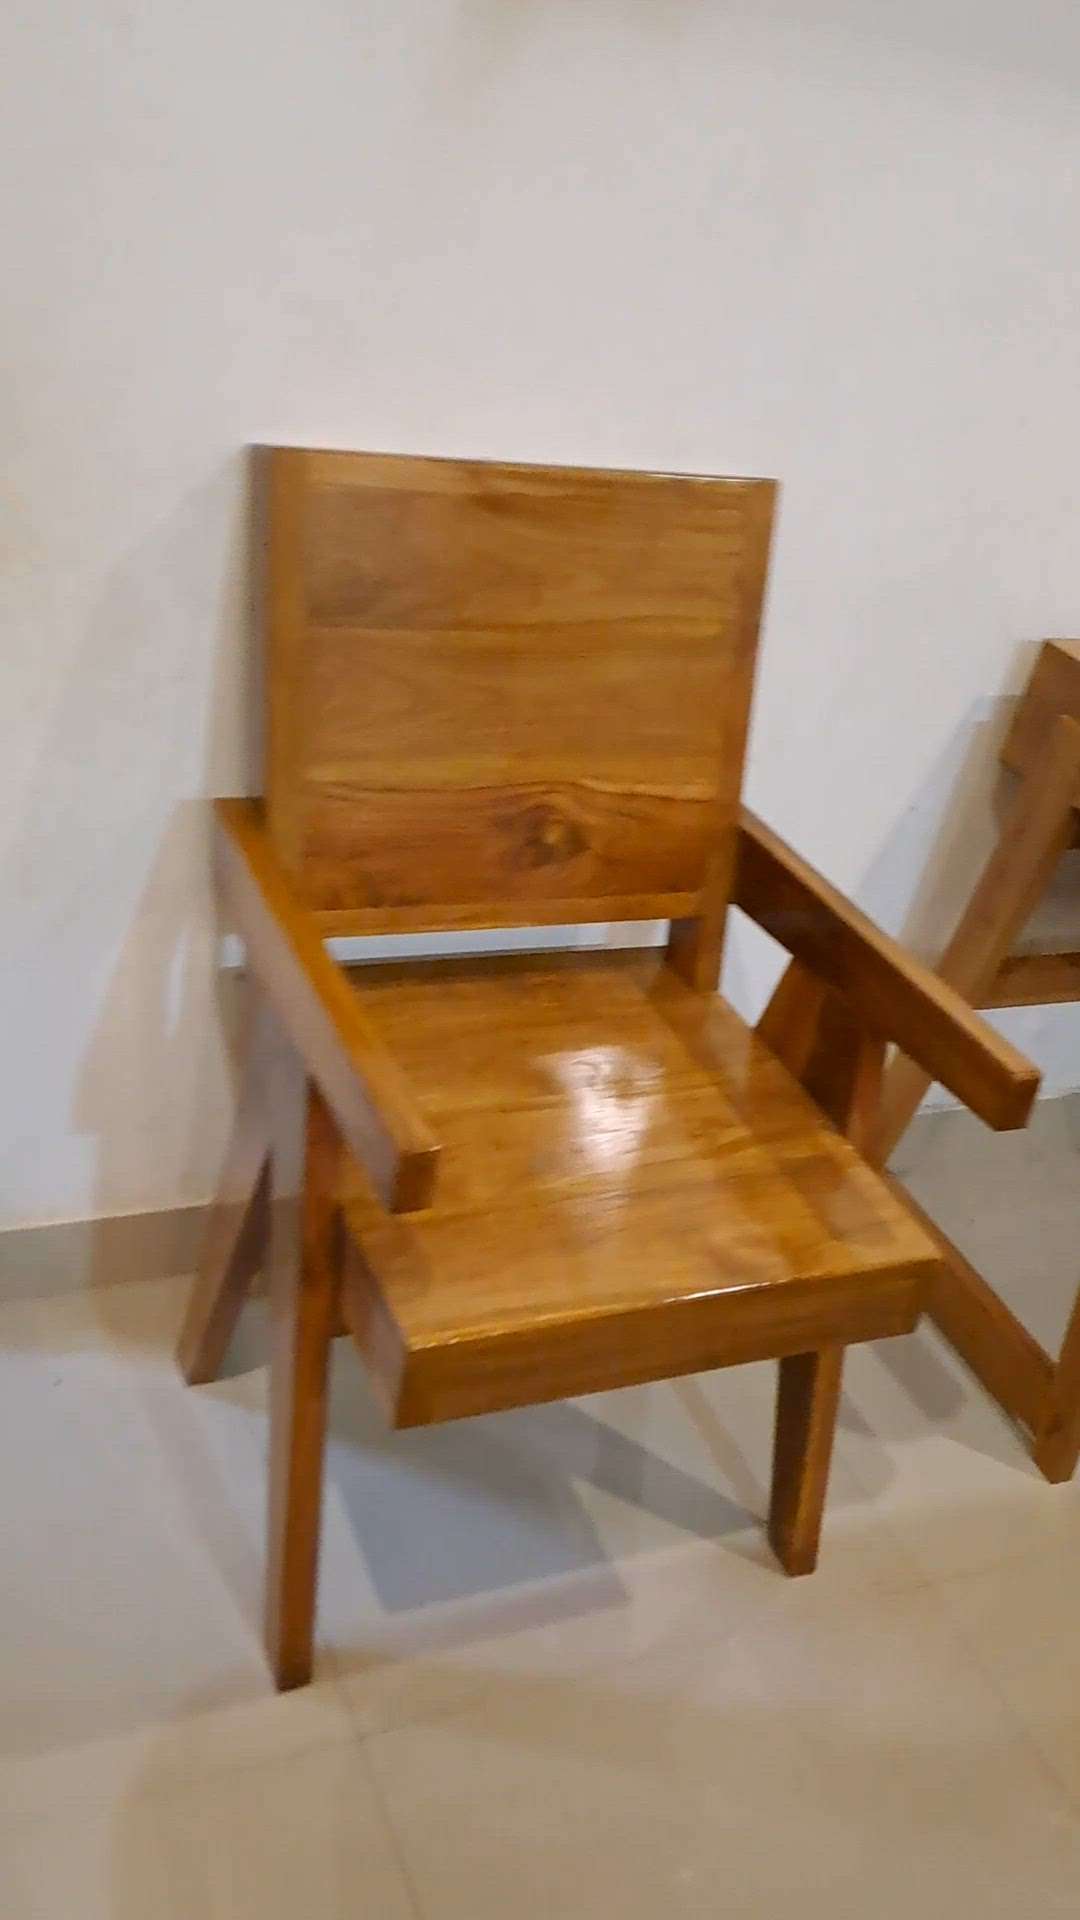 teak wood table and chair #teakwood  #chair  #studytables   #OfficeRoom